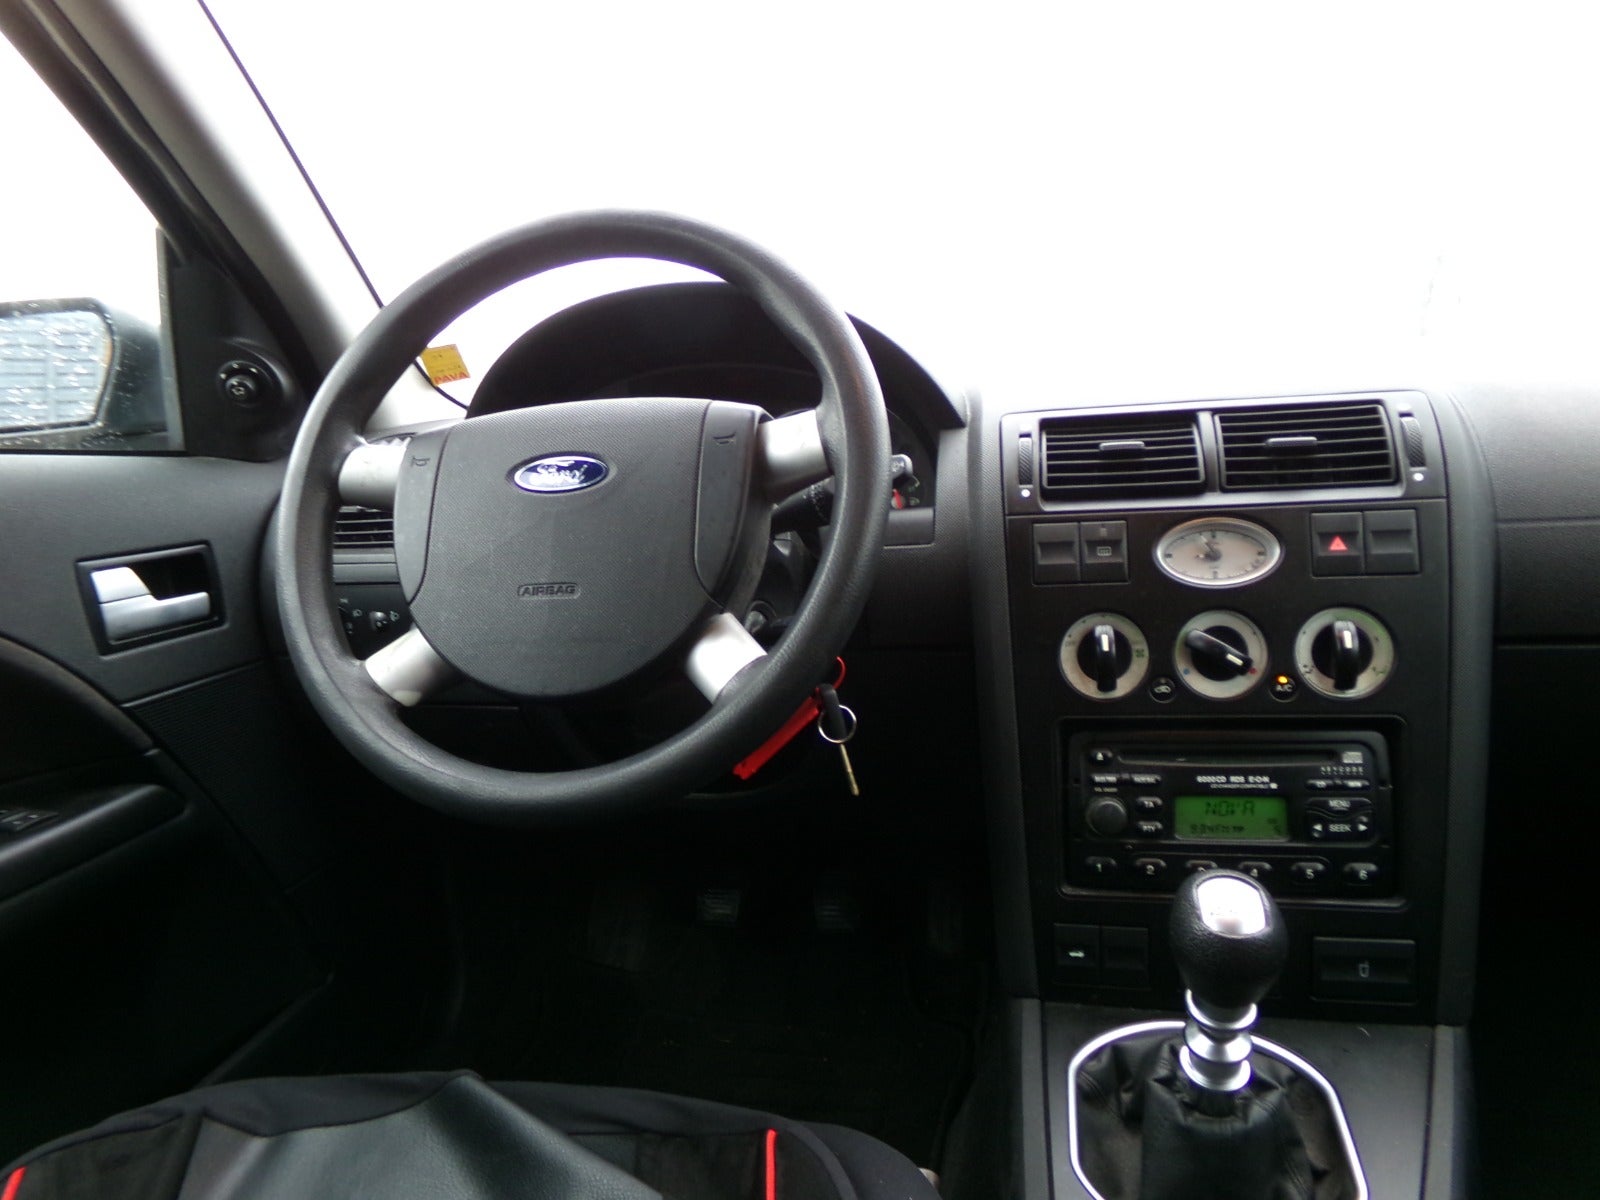 Ford Mondeo 1,8 Ambiente 110 Benzin modelår 2003 km 247000